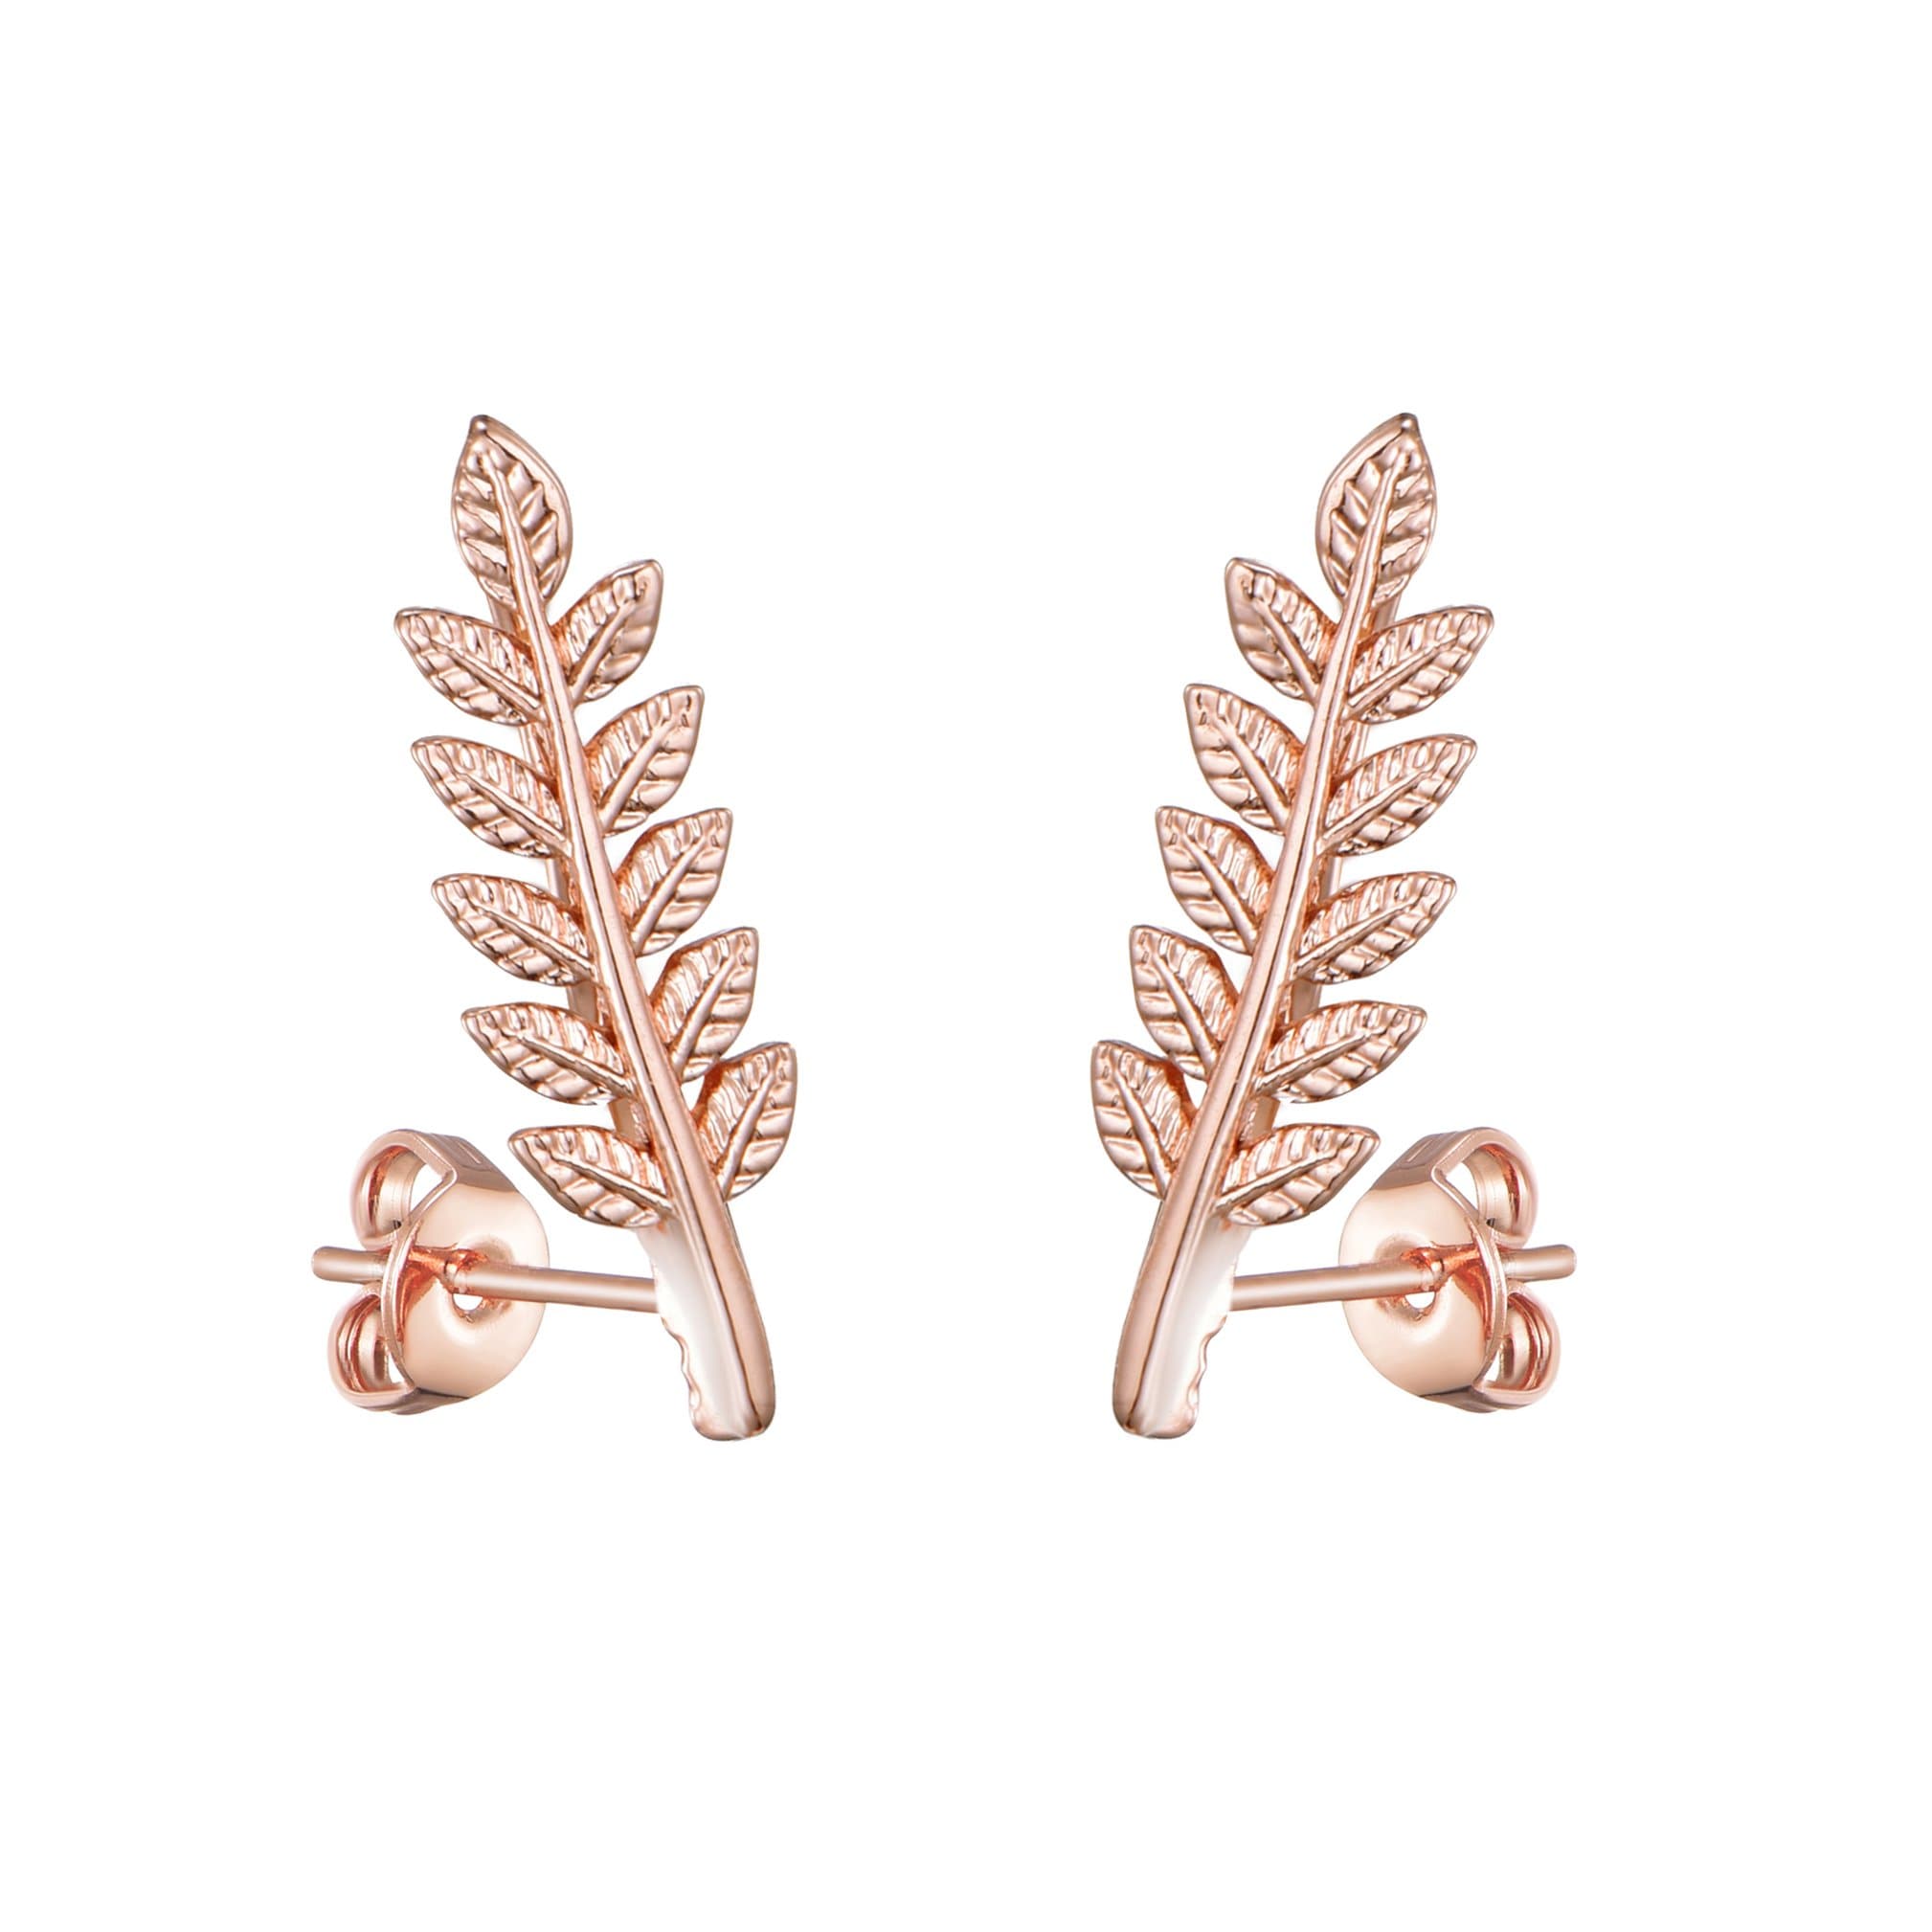 Rose Gold Plated Leaf Earrings by Philip Jones Jewellery